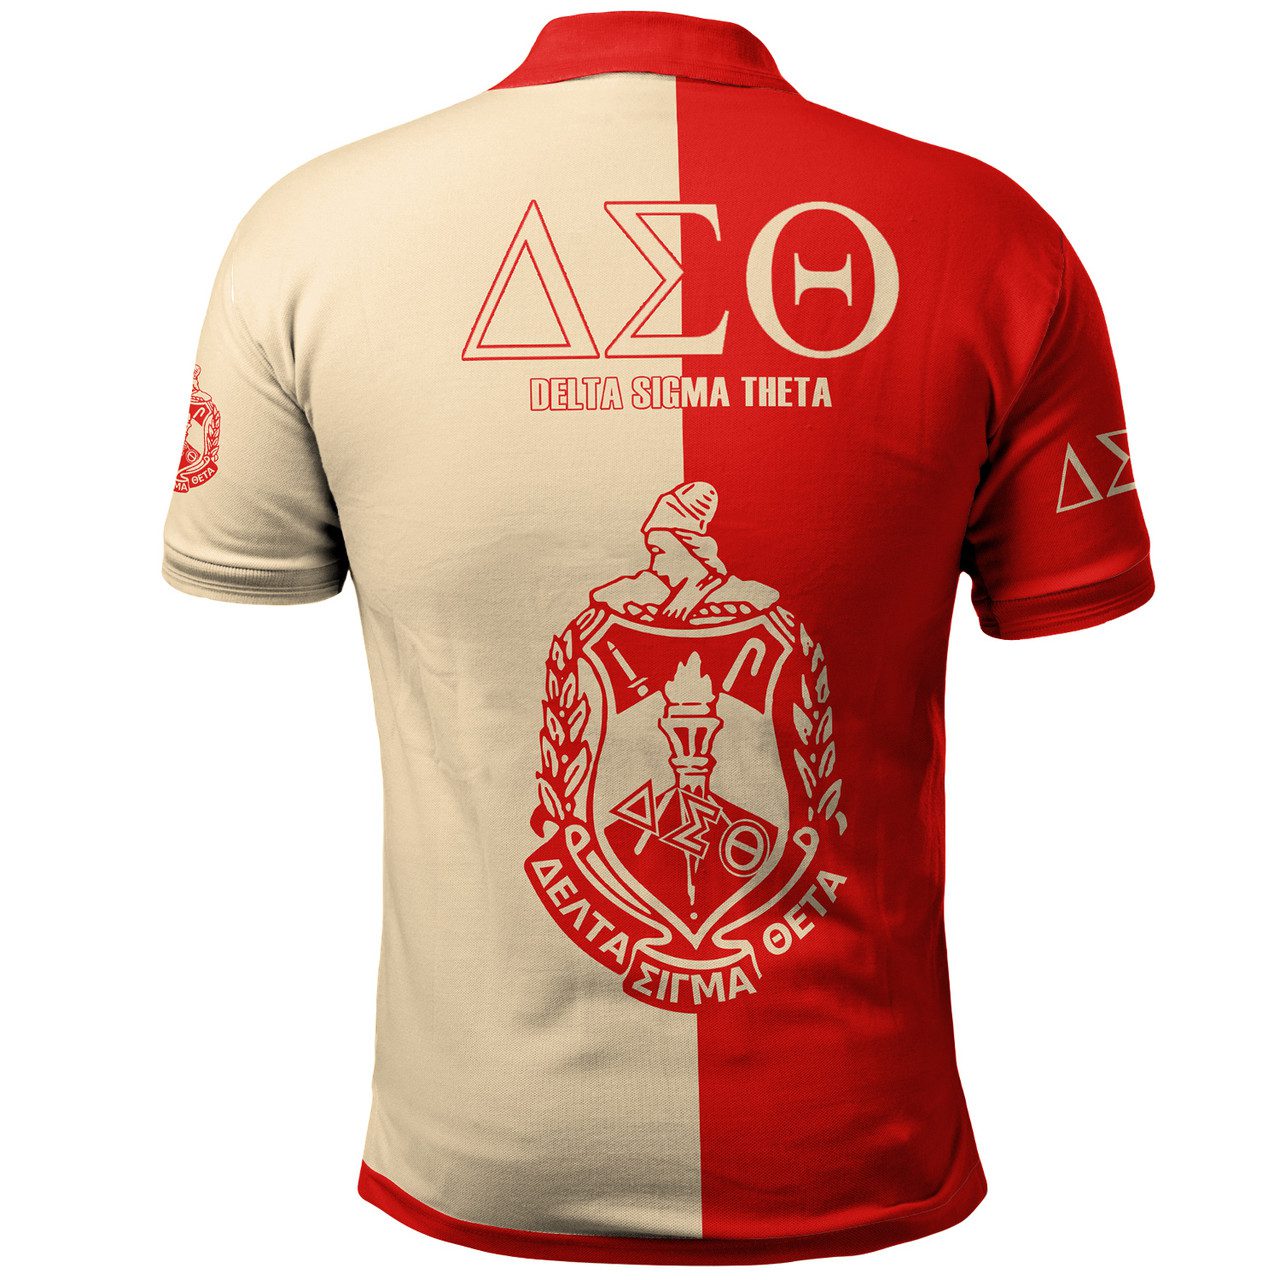 Delta Sigma Theta Polo Shirt – Sorority Delta Sigma Theta Seal Polo Shirt